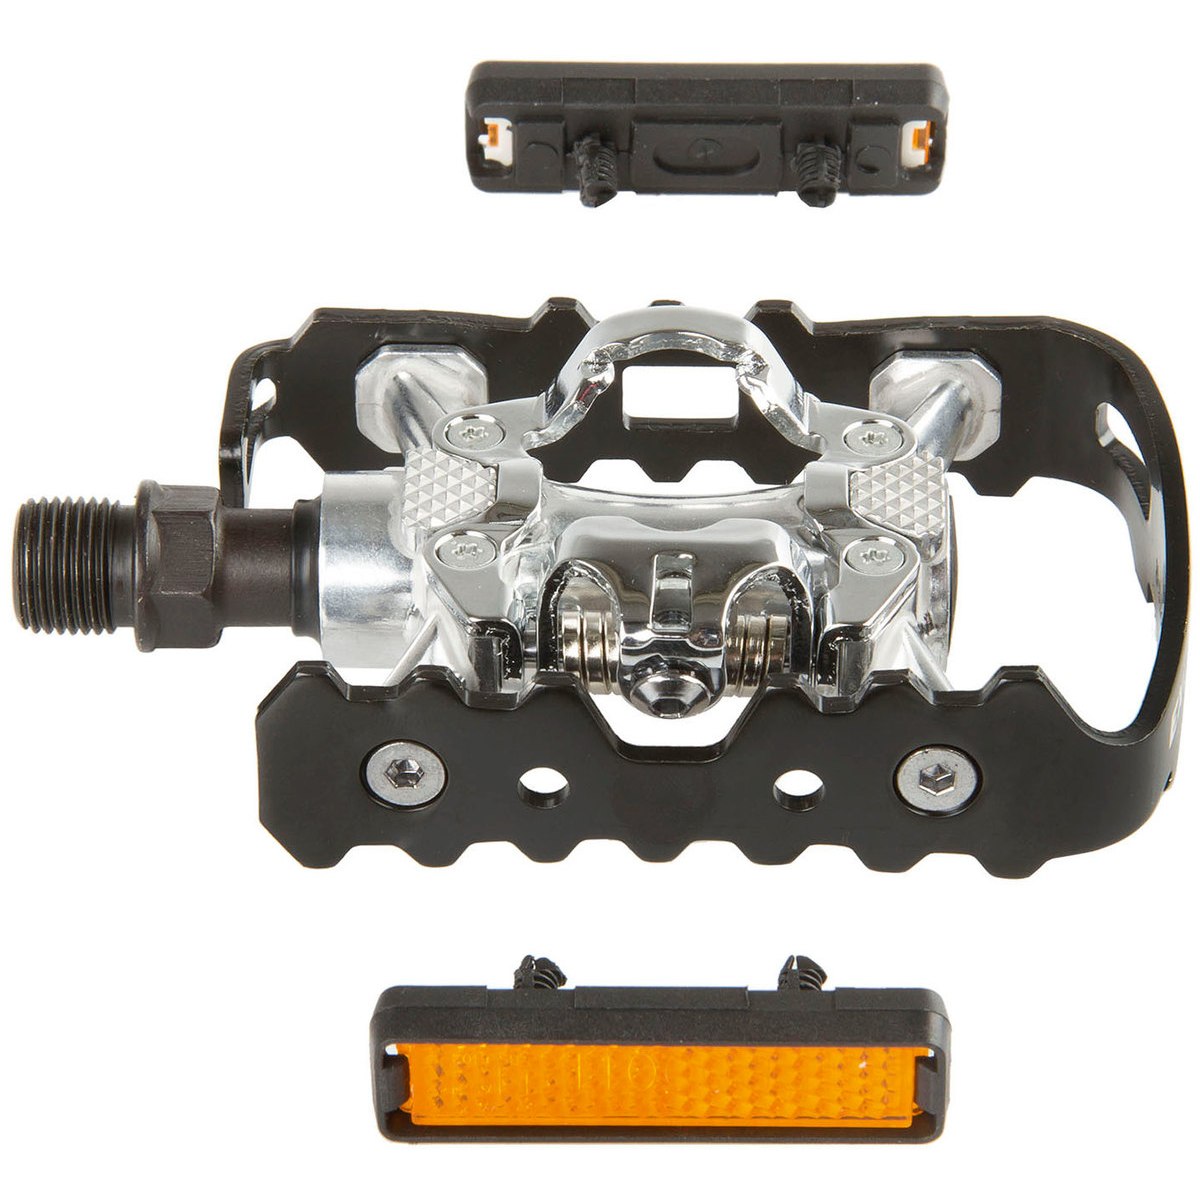 Productfoto van Exustar E-PM818 Triple Interface Pedal - black